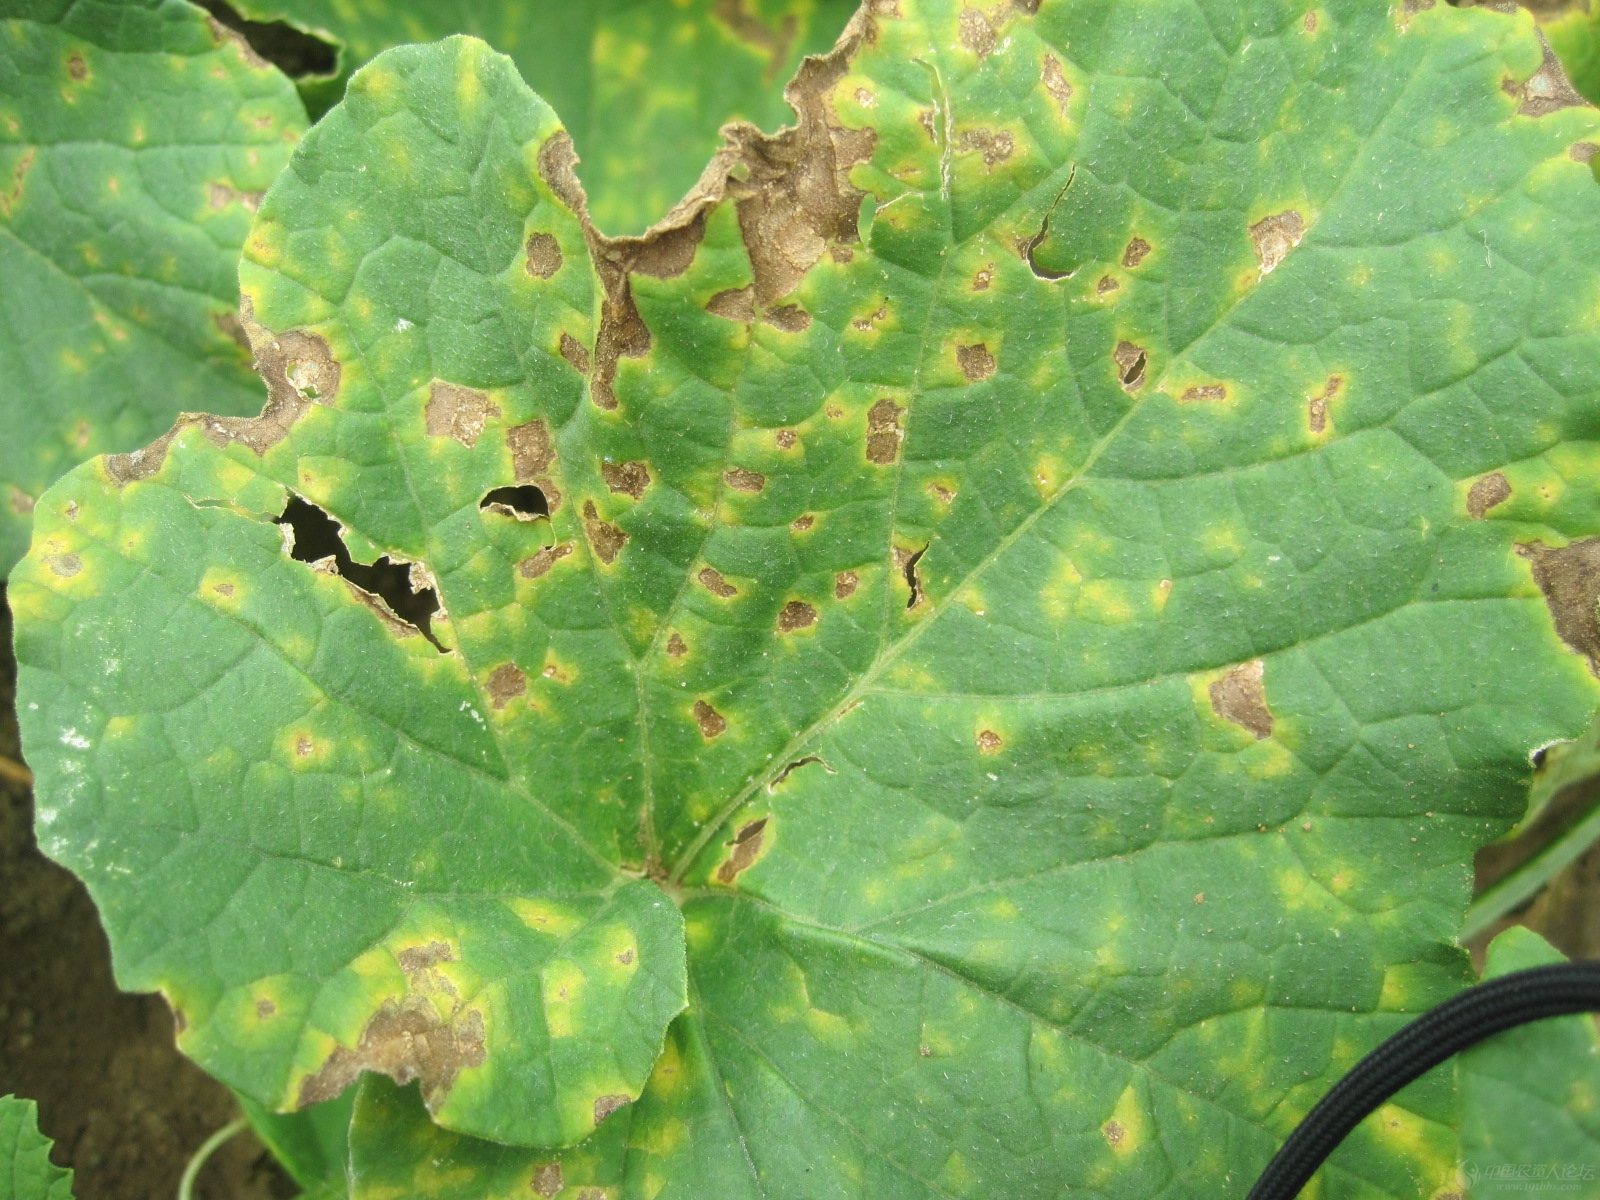 angular leaf spot 甜瓜细菌性角斑病是甜瓜的重要病害